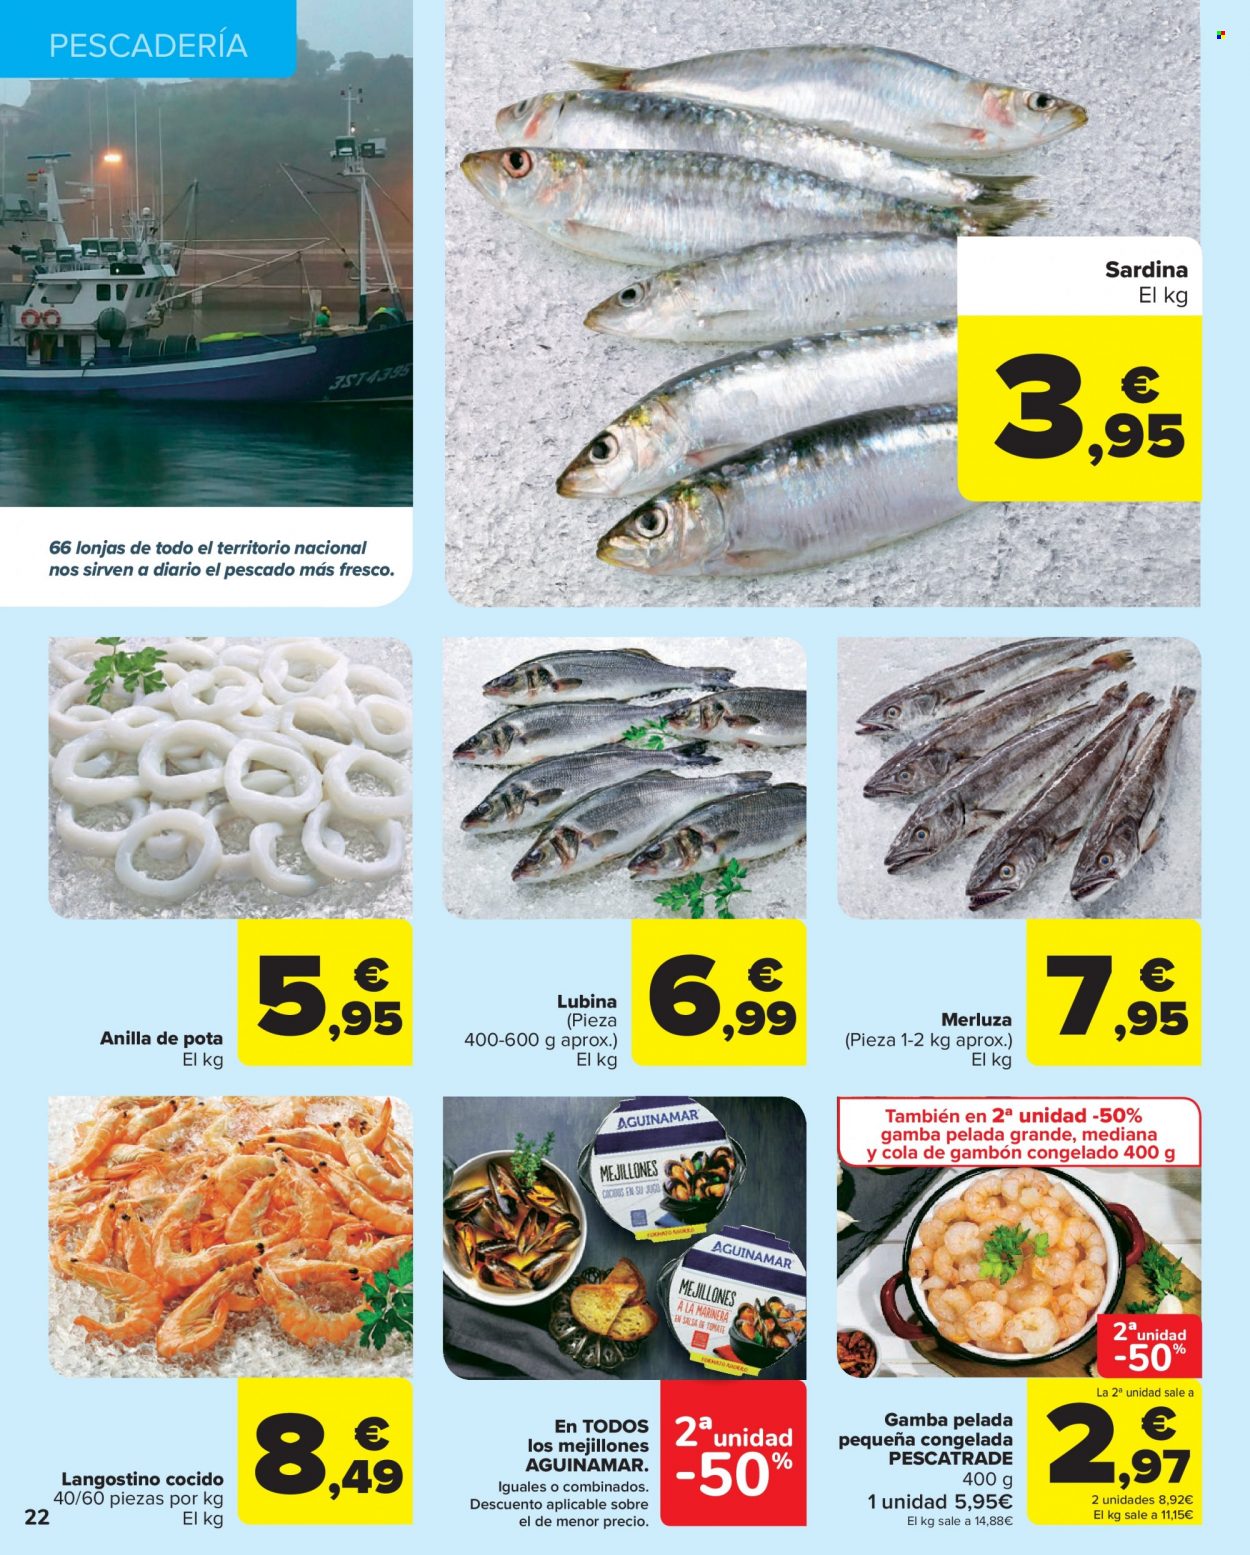 thumbnail - Folleto actual Carrefour - 11/05/22 - 24/05/22 - Ventas - merluza, gambón, langostino, lubina, mejillones, sardinas. Página 22.